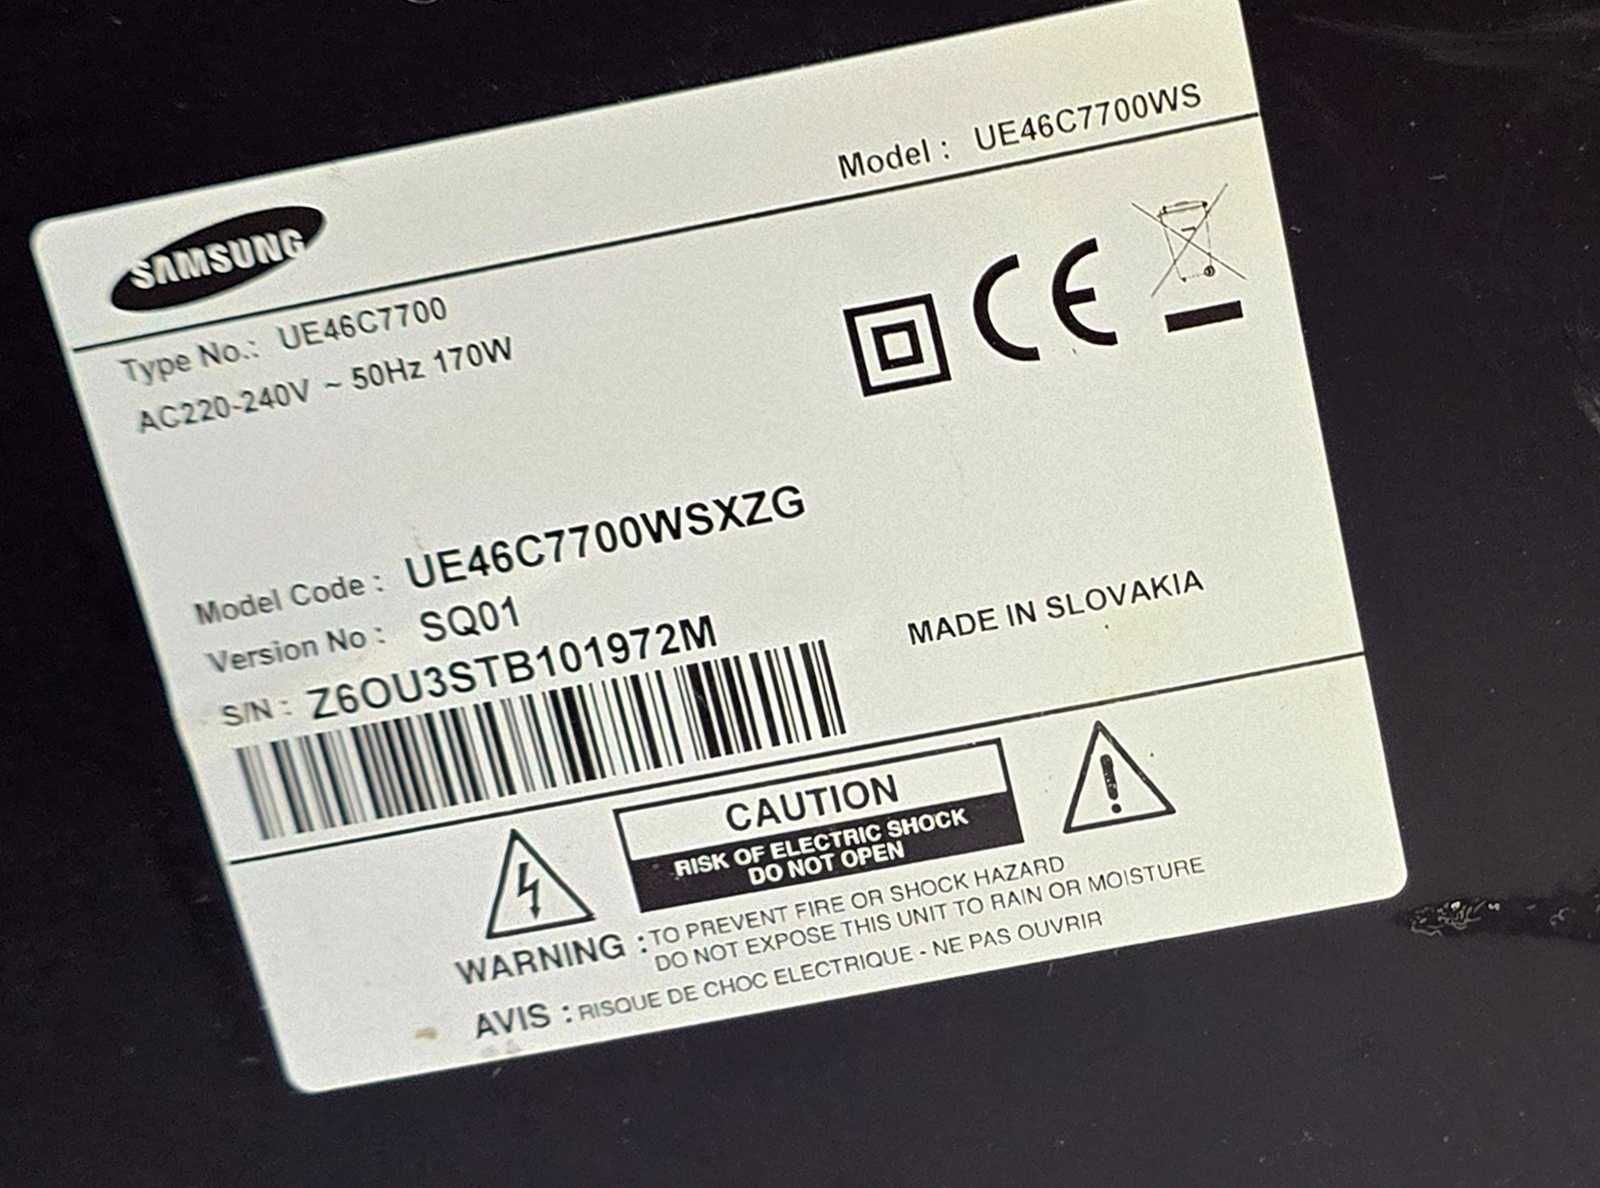 Smart TV - Samsung UE46C7700 - 46 inch/116 cm - mainboard defect